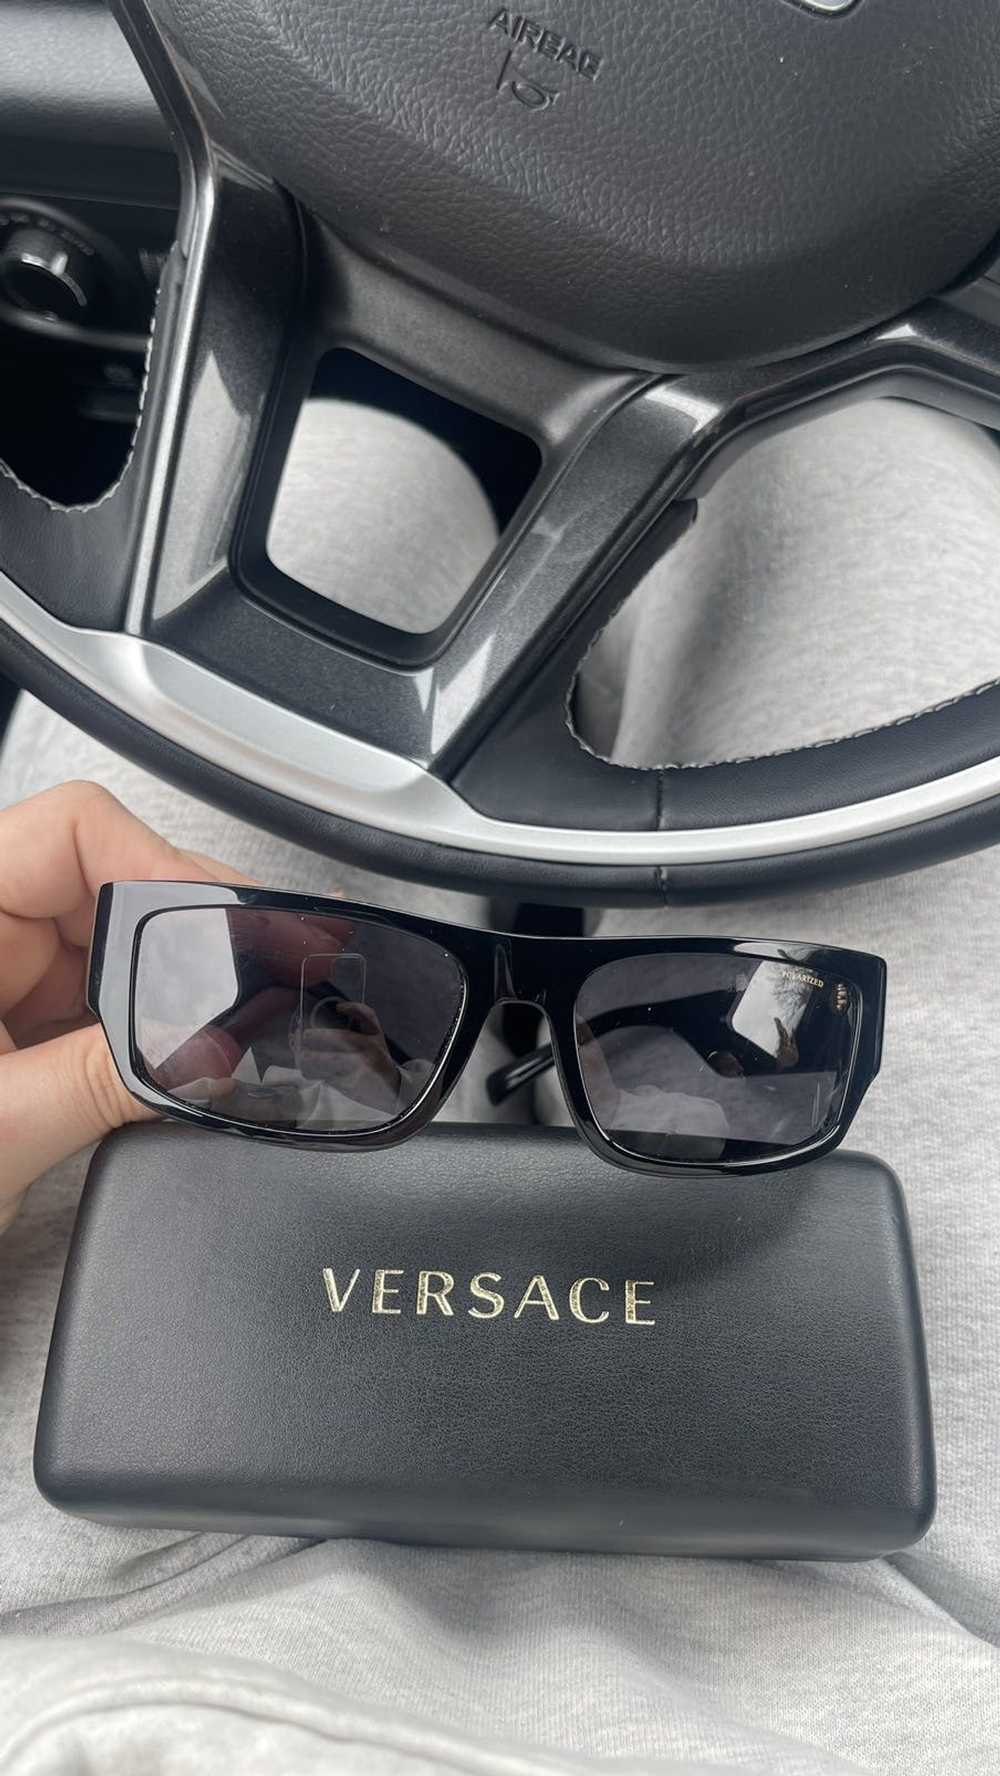 Versace Versace Sunglasses Polarized - image 5